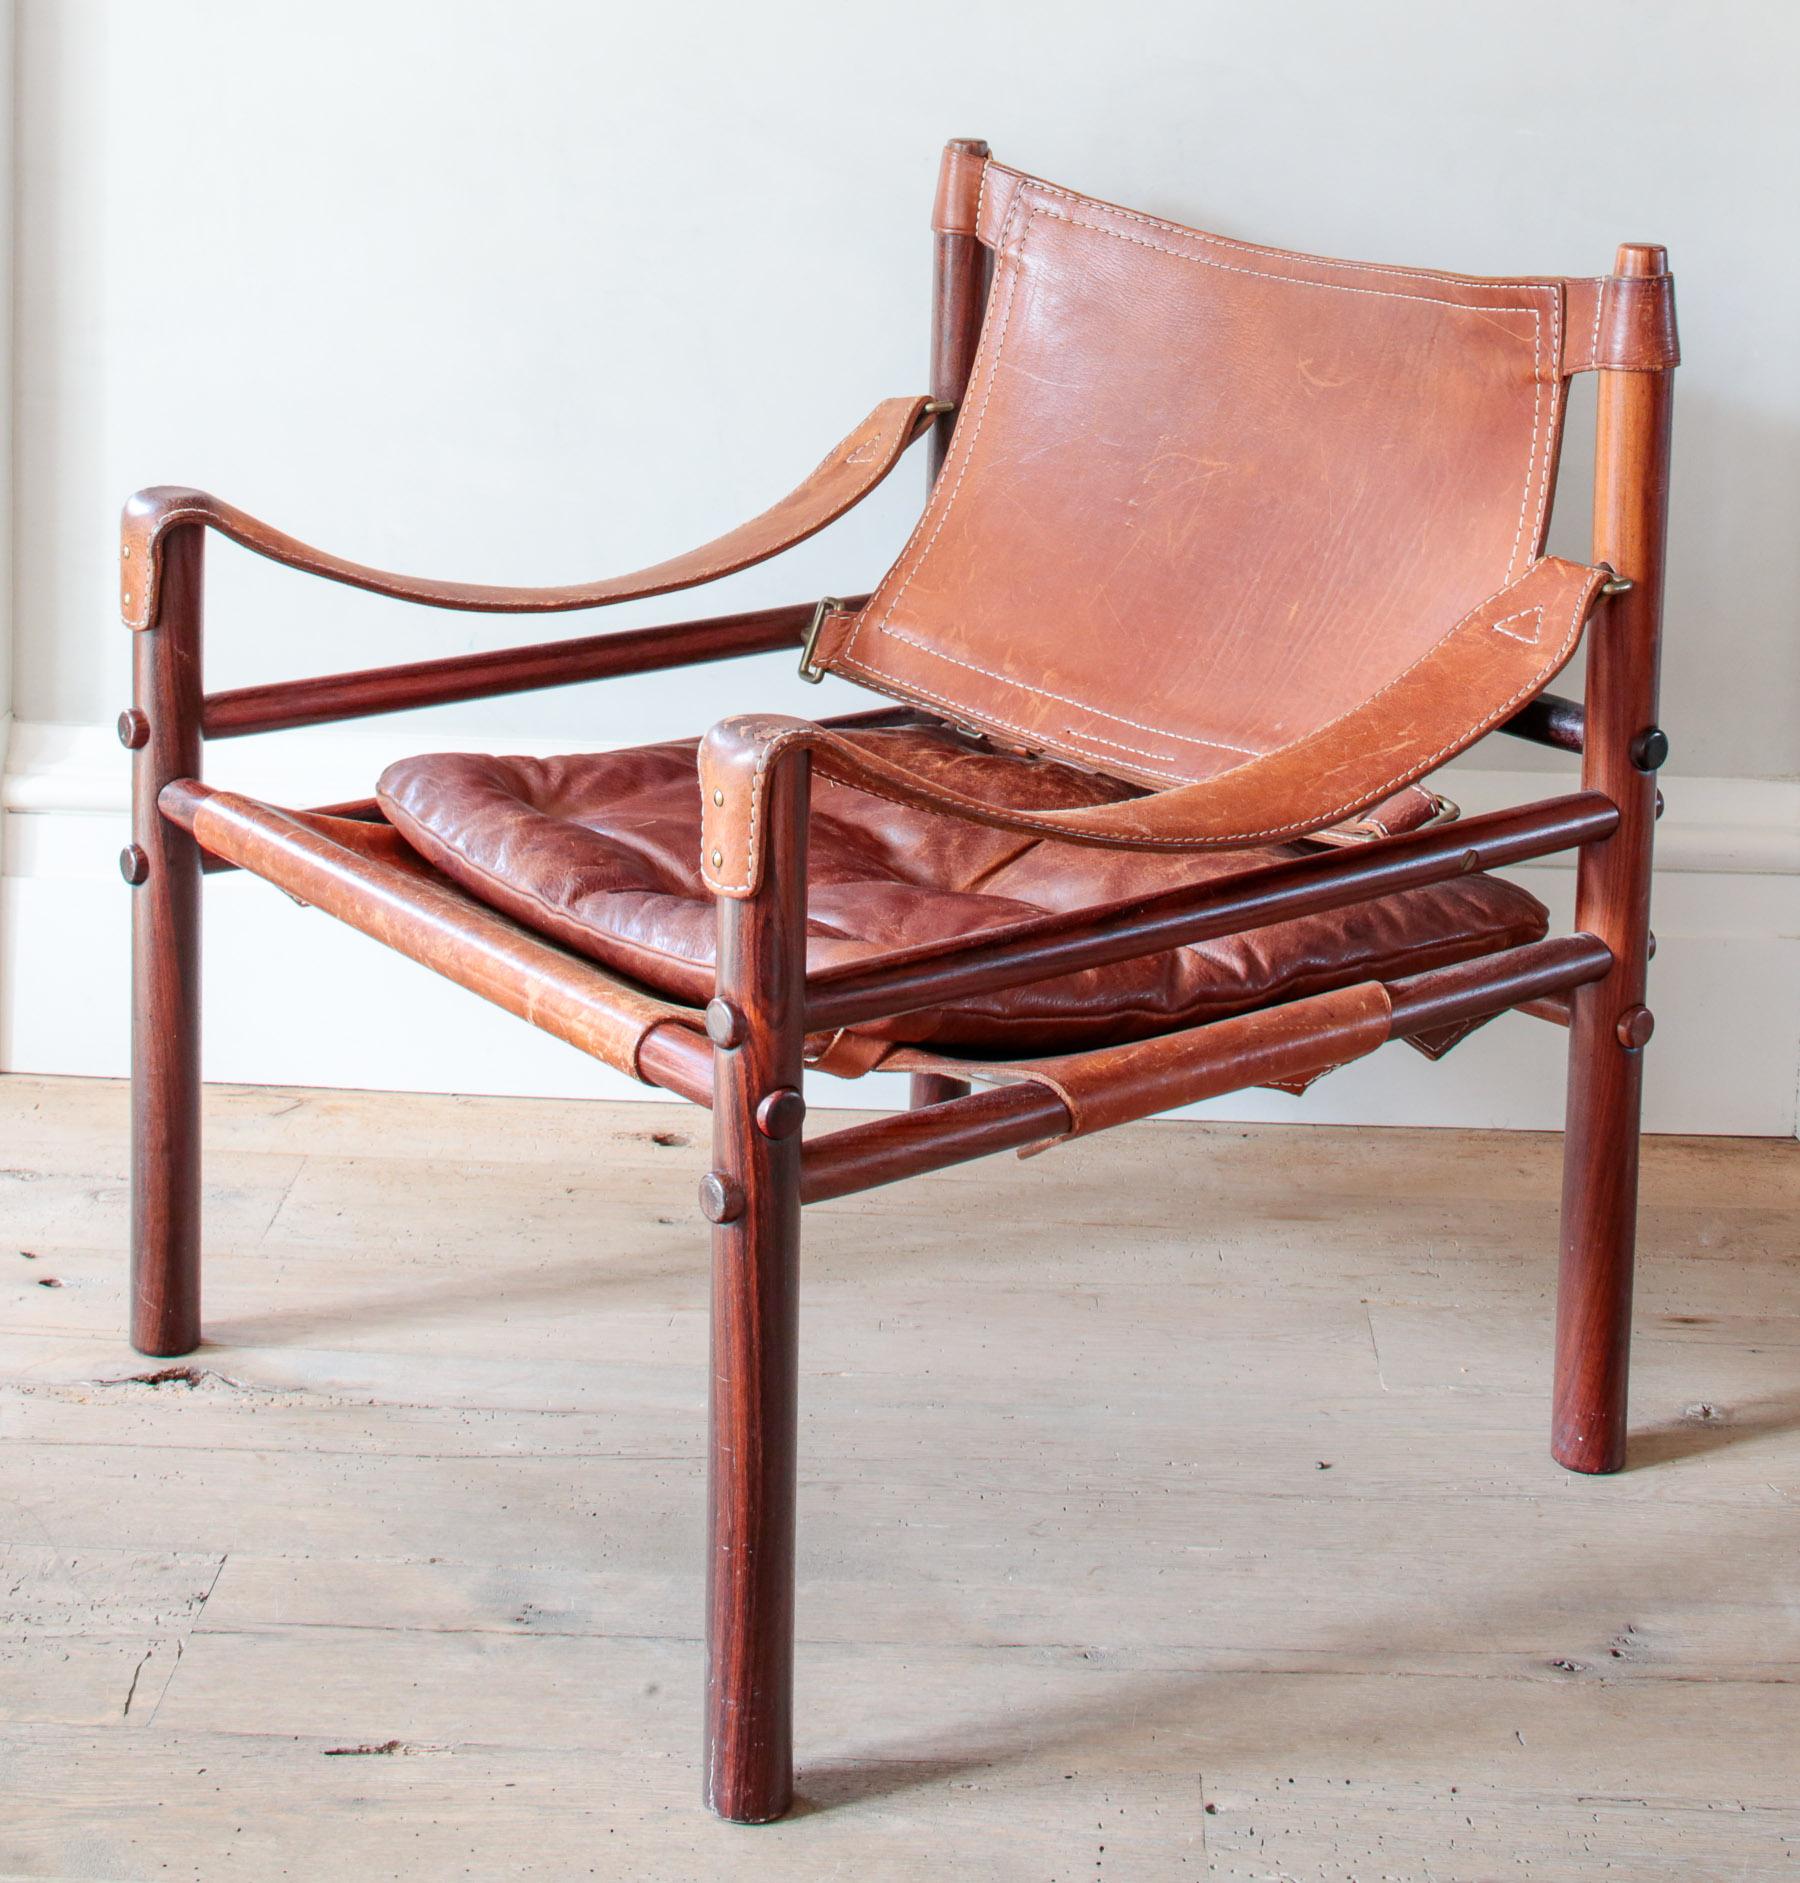 Scandinavian Modern Danish Modern Sirroco Safari Chair in Rosewood & Maroon Leather by Arne Norell